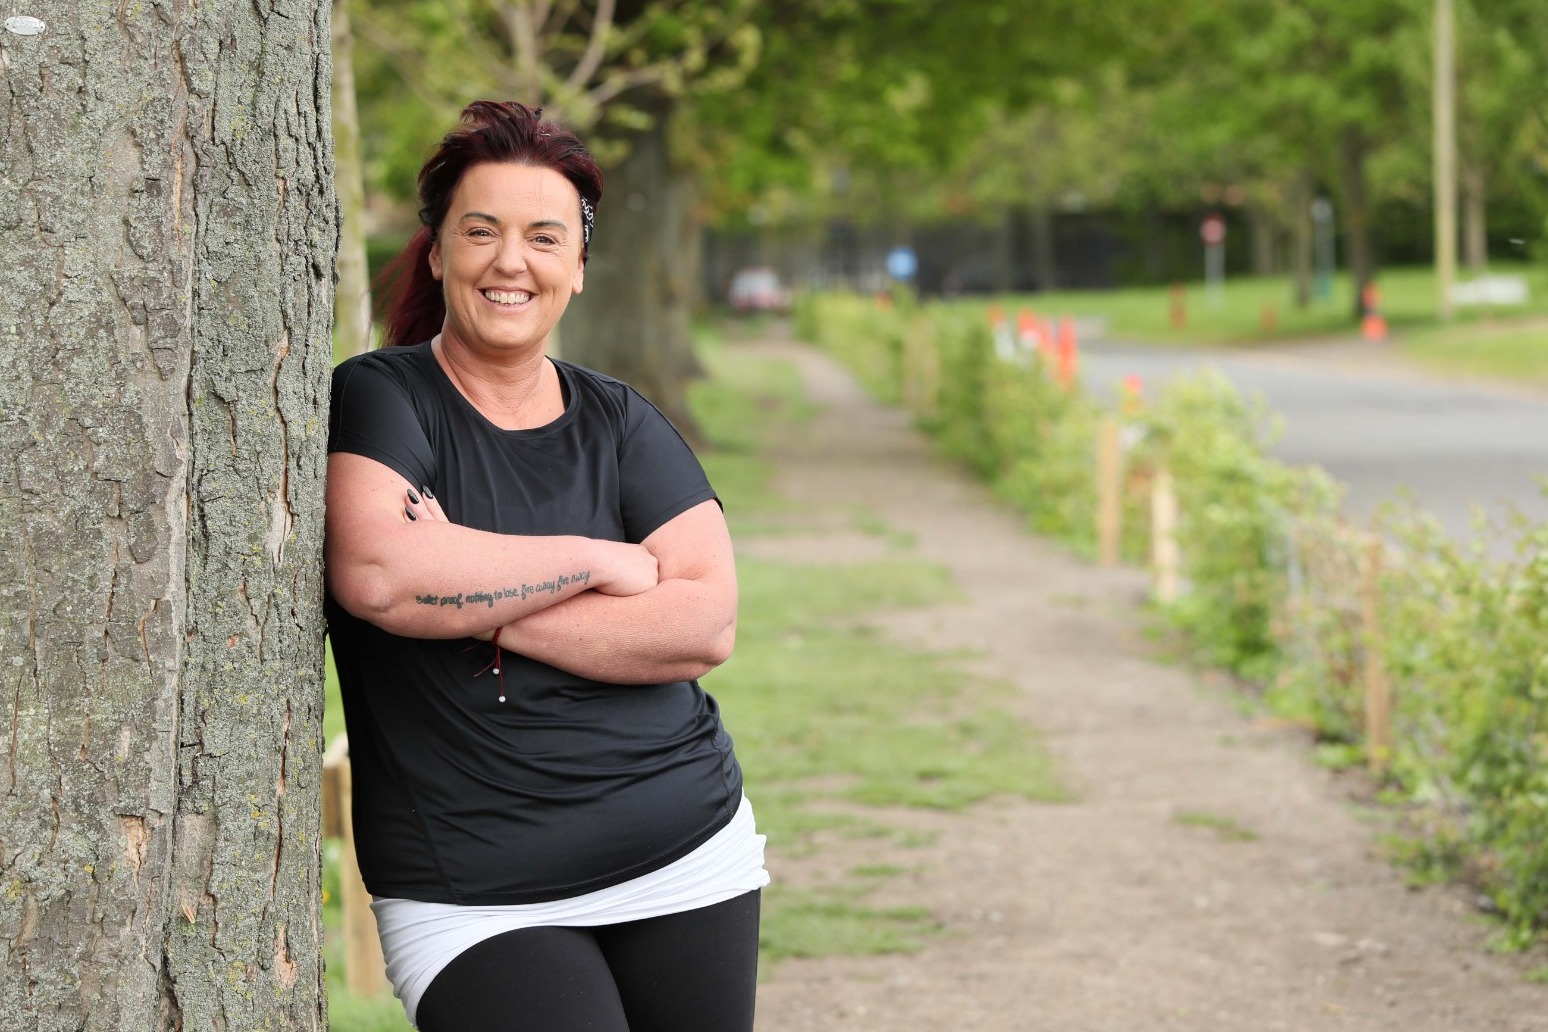 Woman who mistook stroke for hangover runs 10k to thank medical team 